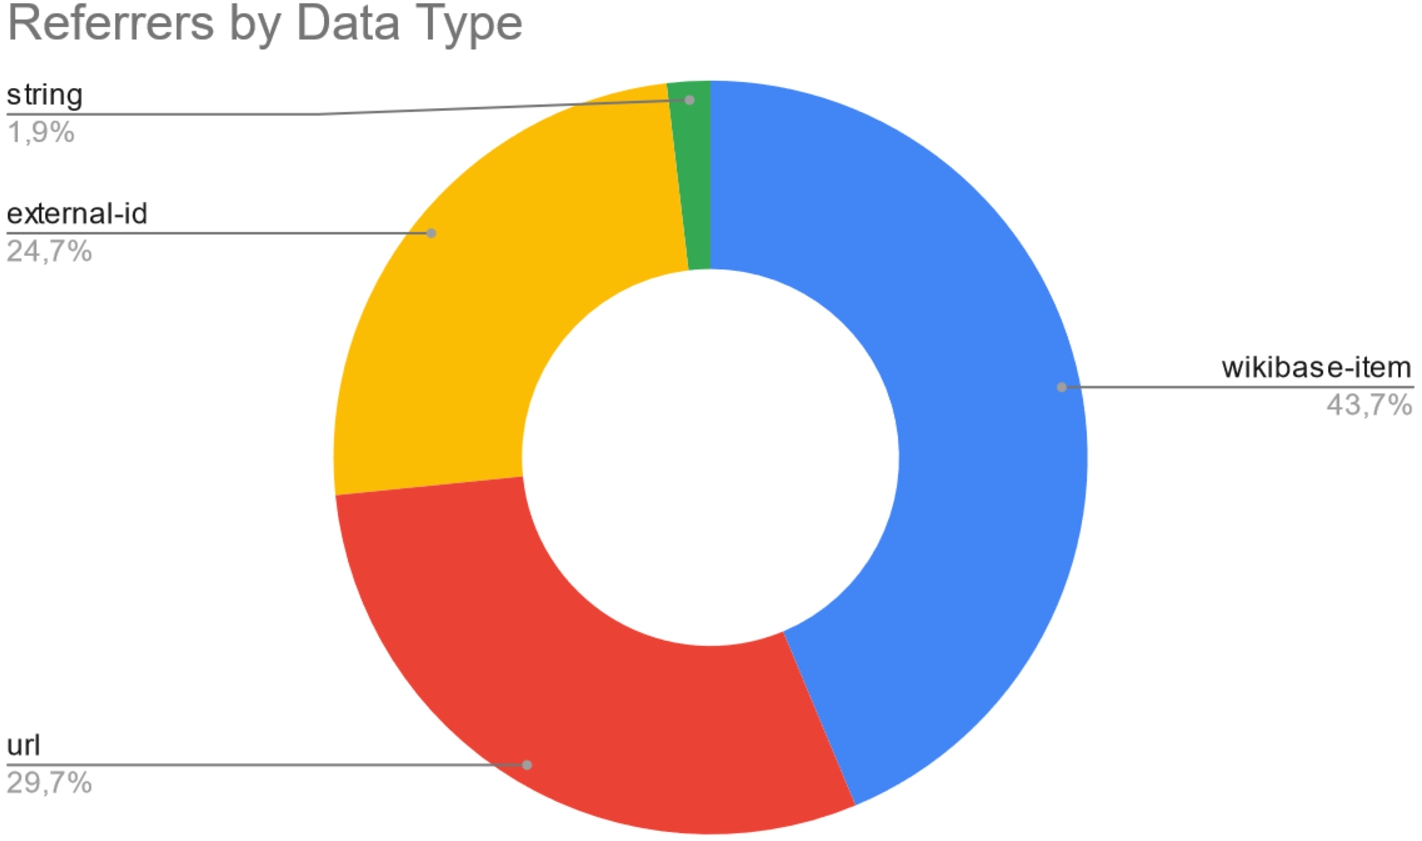 Data type distribution of referrers.